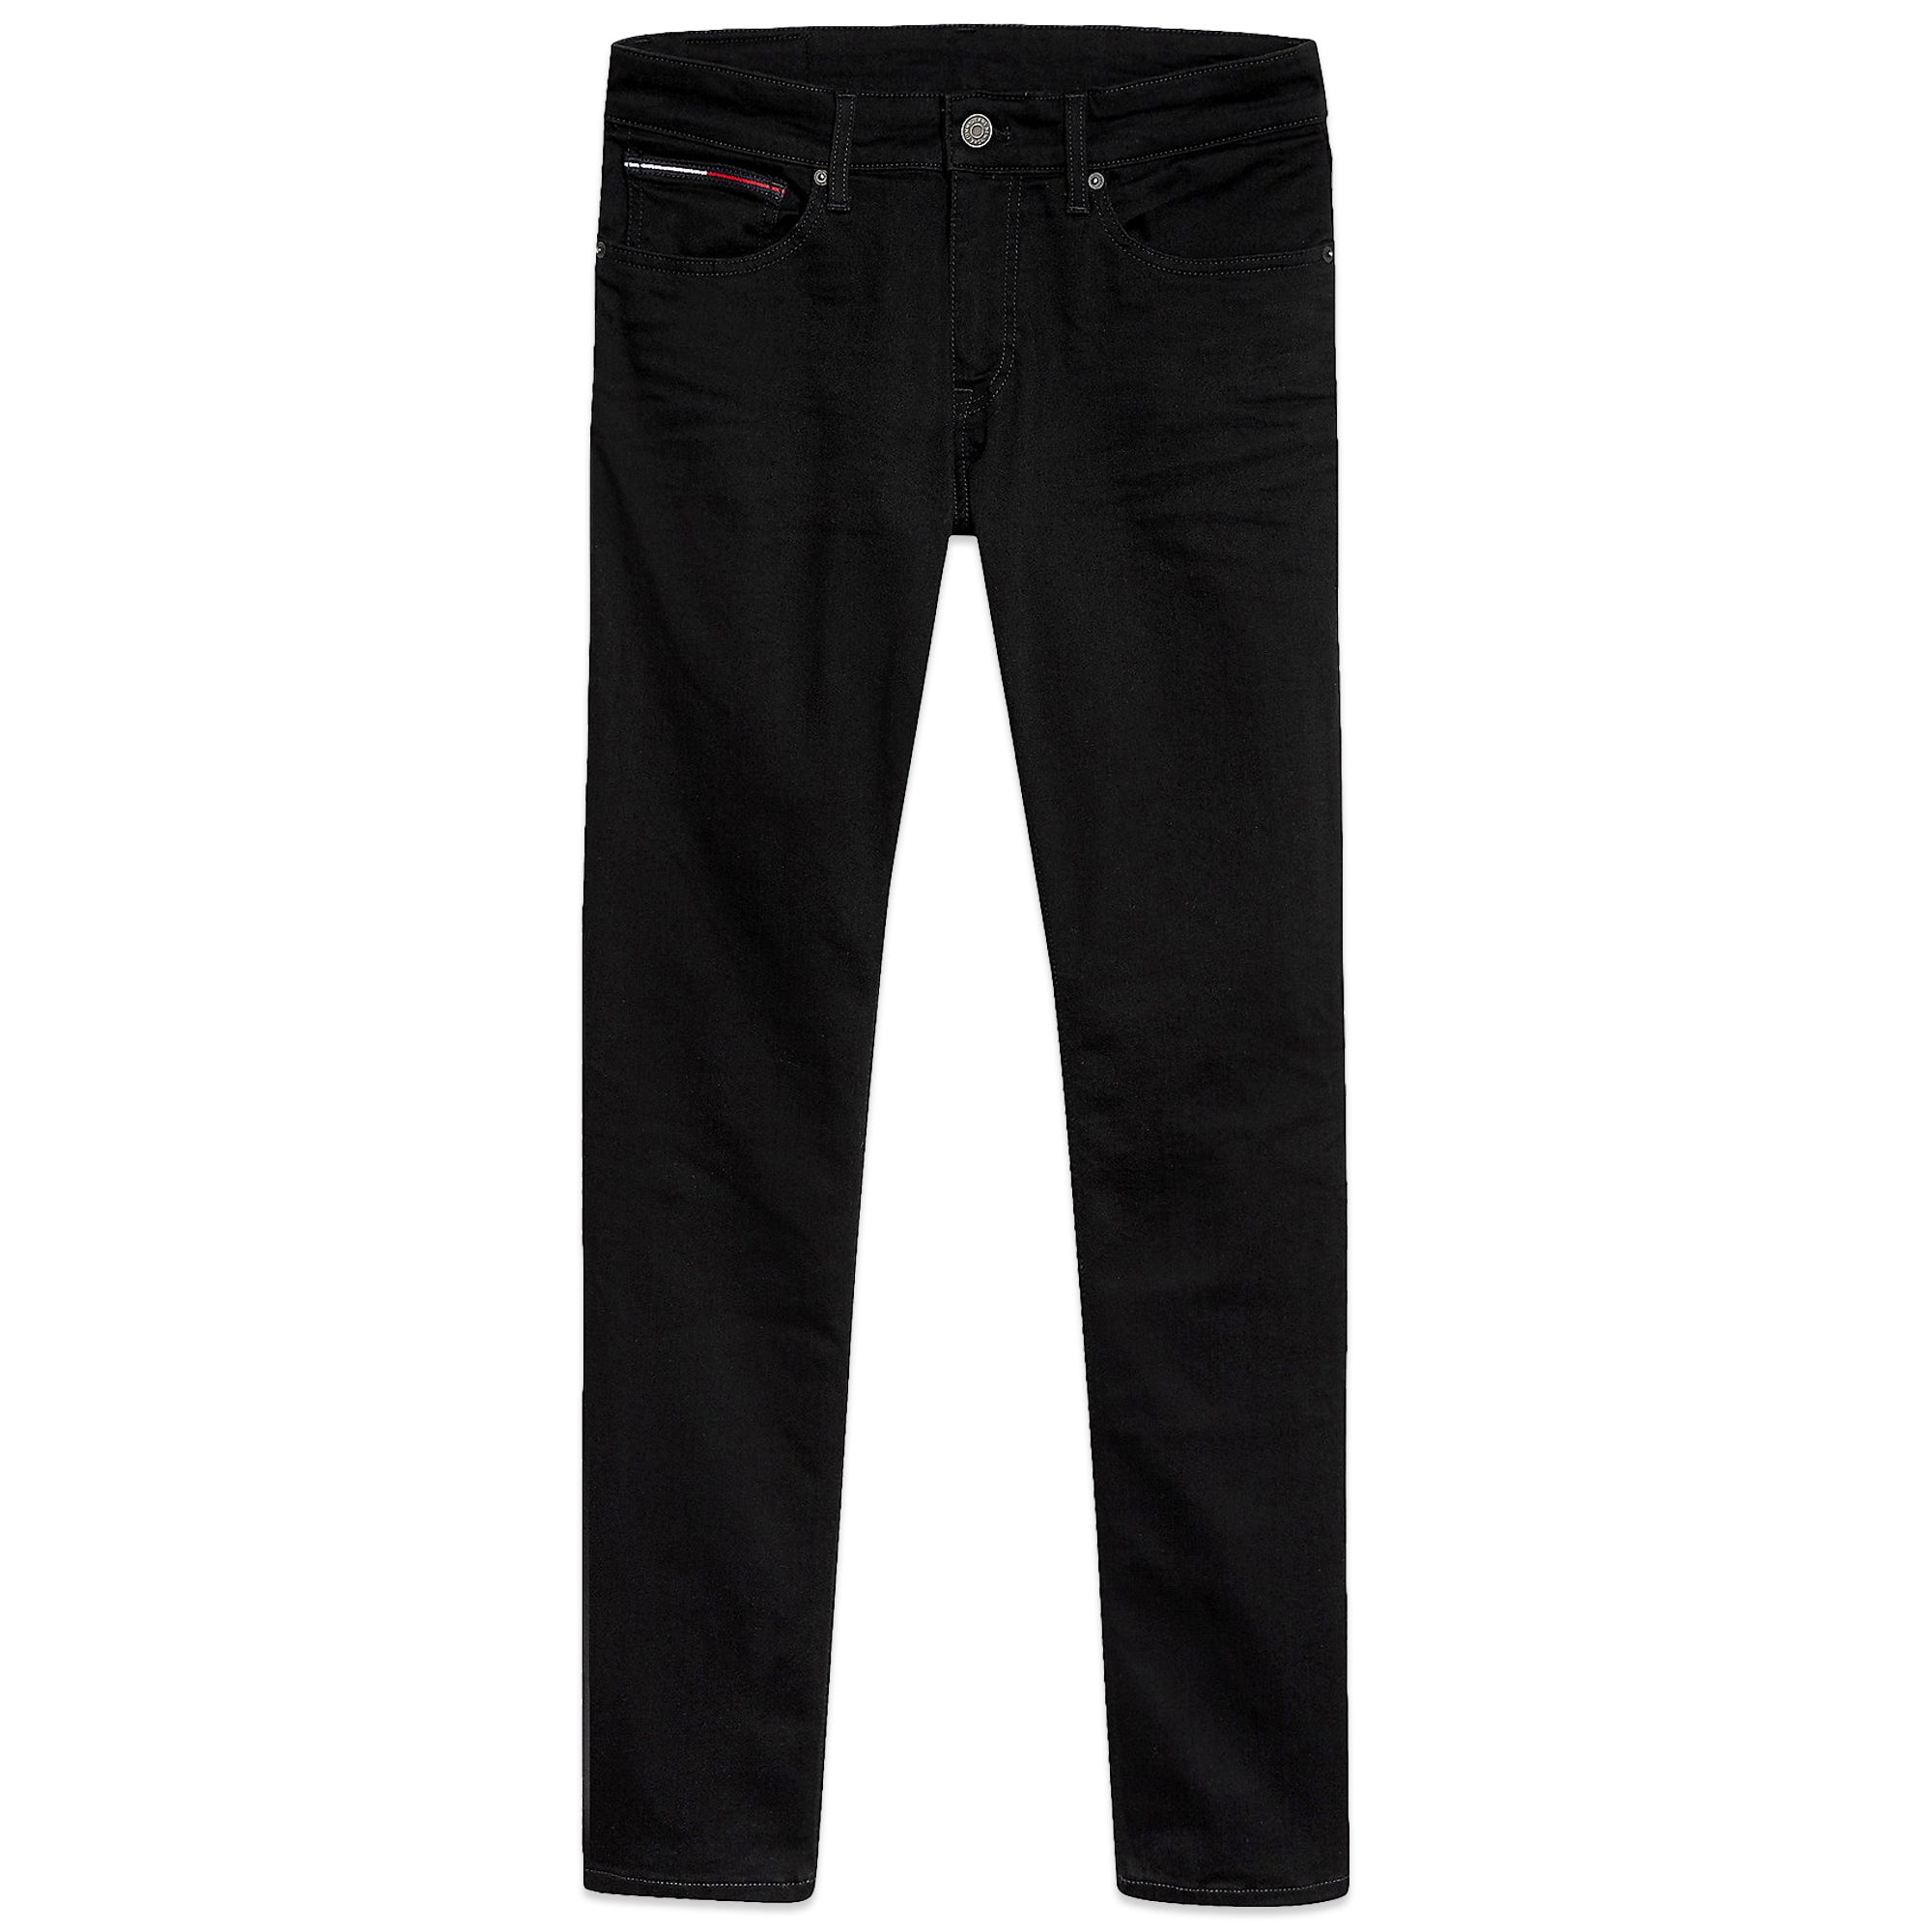 Jeans New Jeans Scanton Black Tommy - Stretch Slim